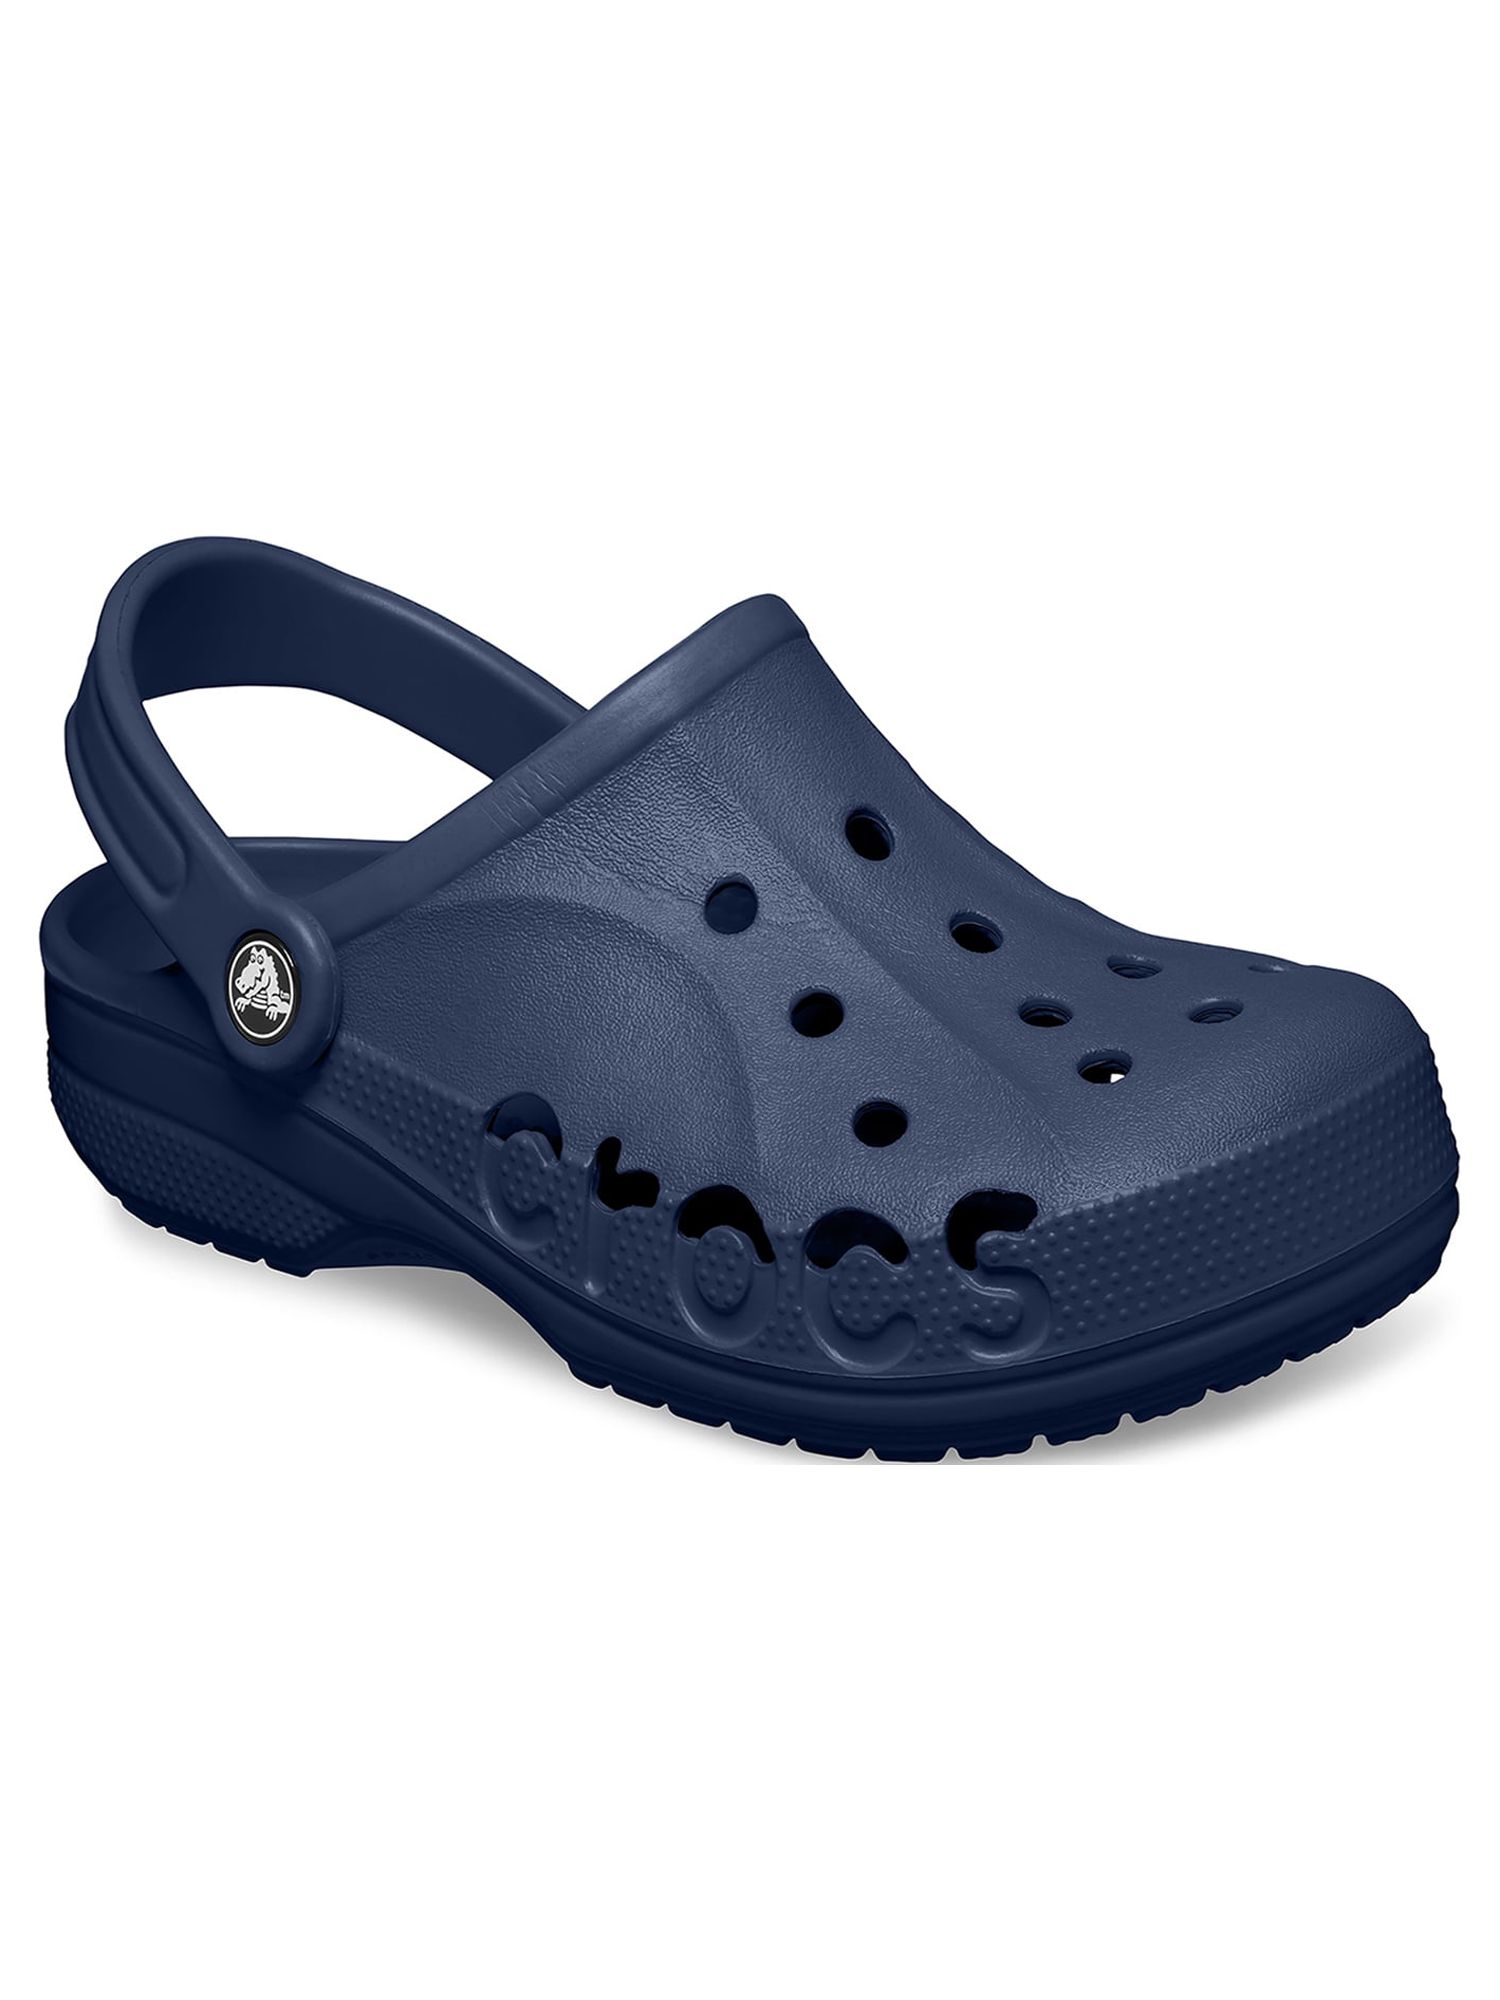 Crocs Men's and Women's Unisex Baya Clog Sandals - image 1 of 6